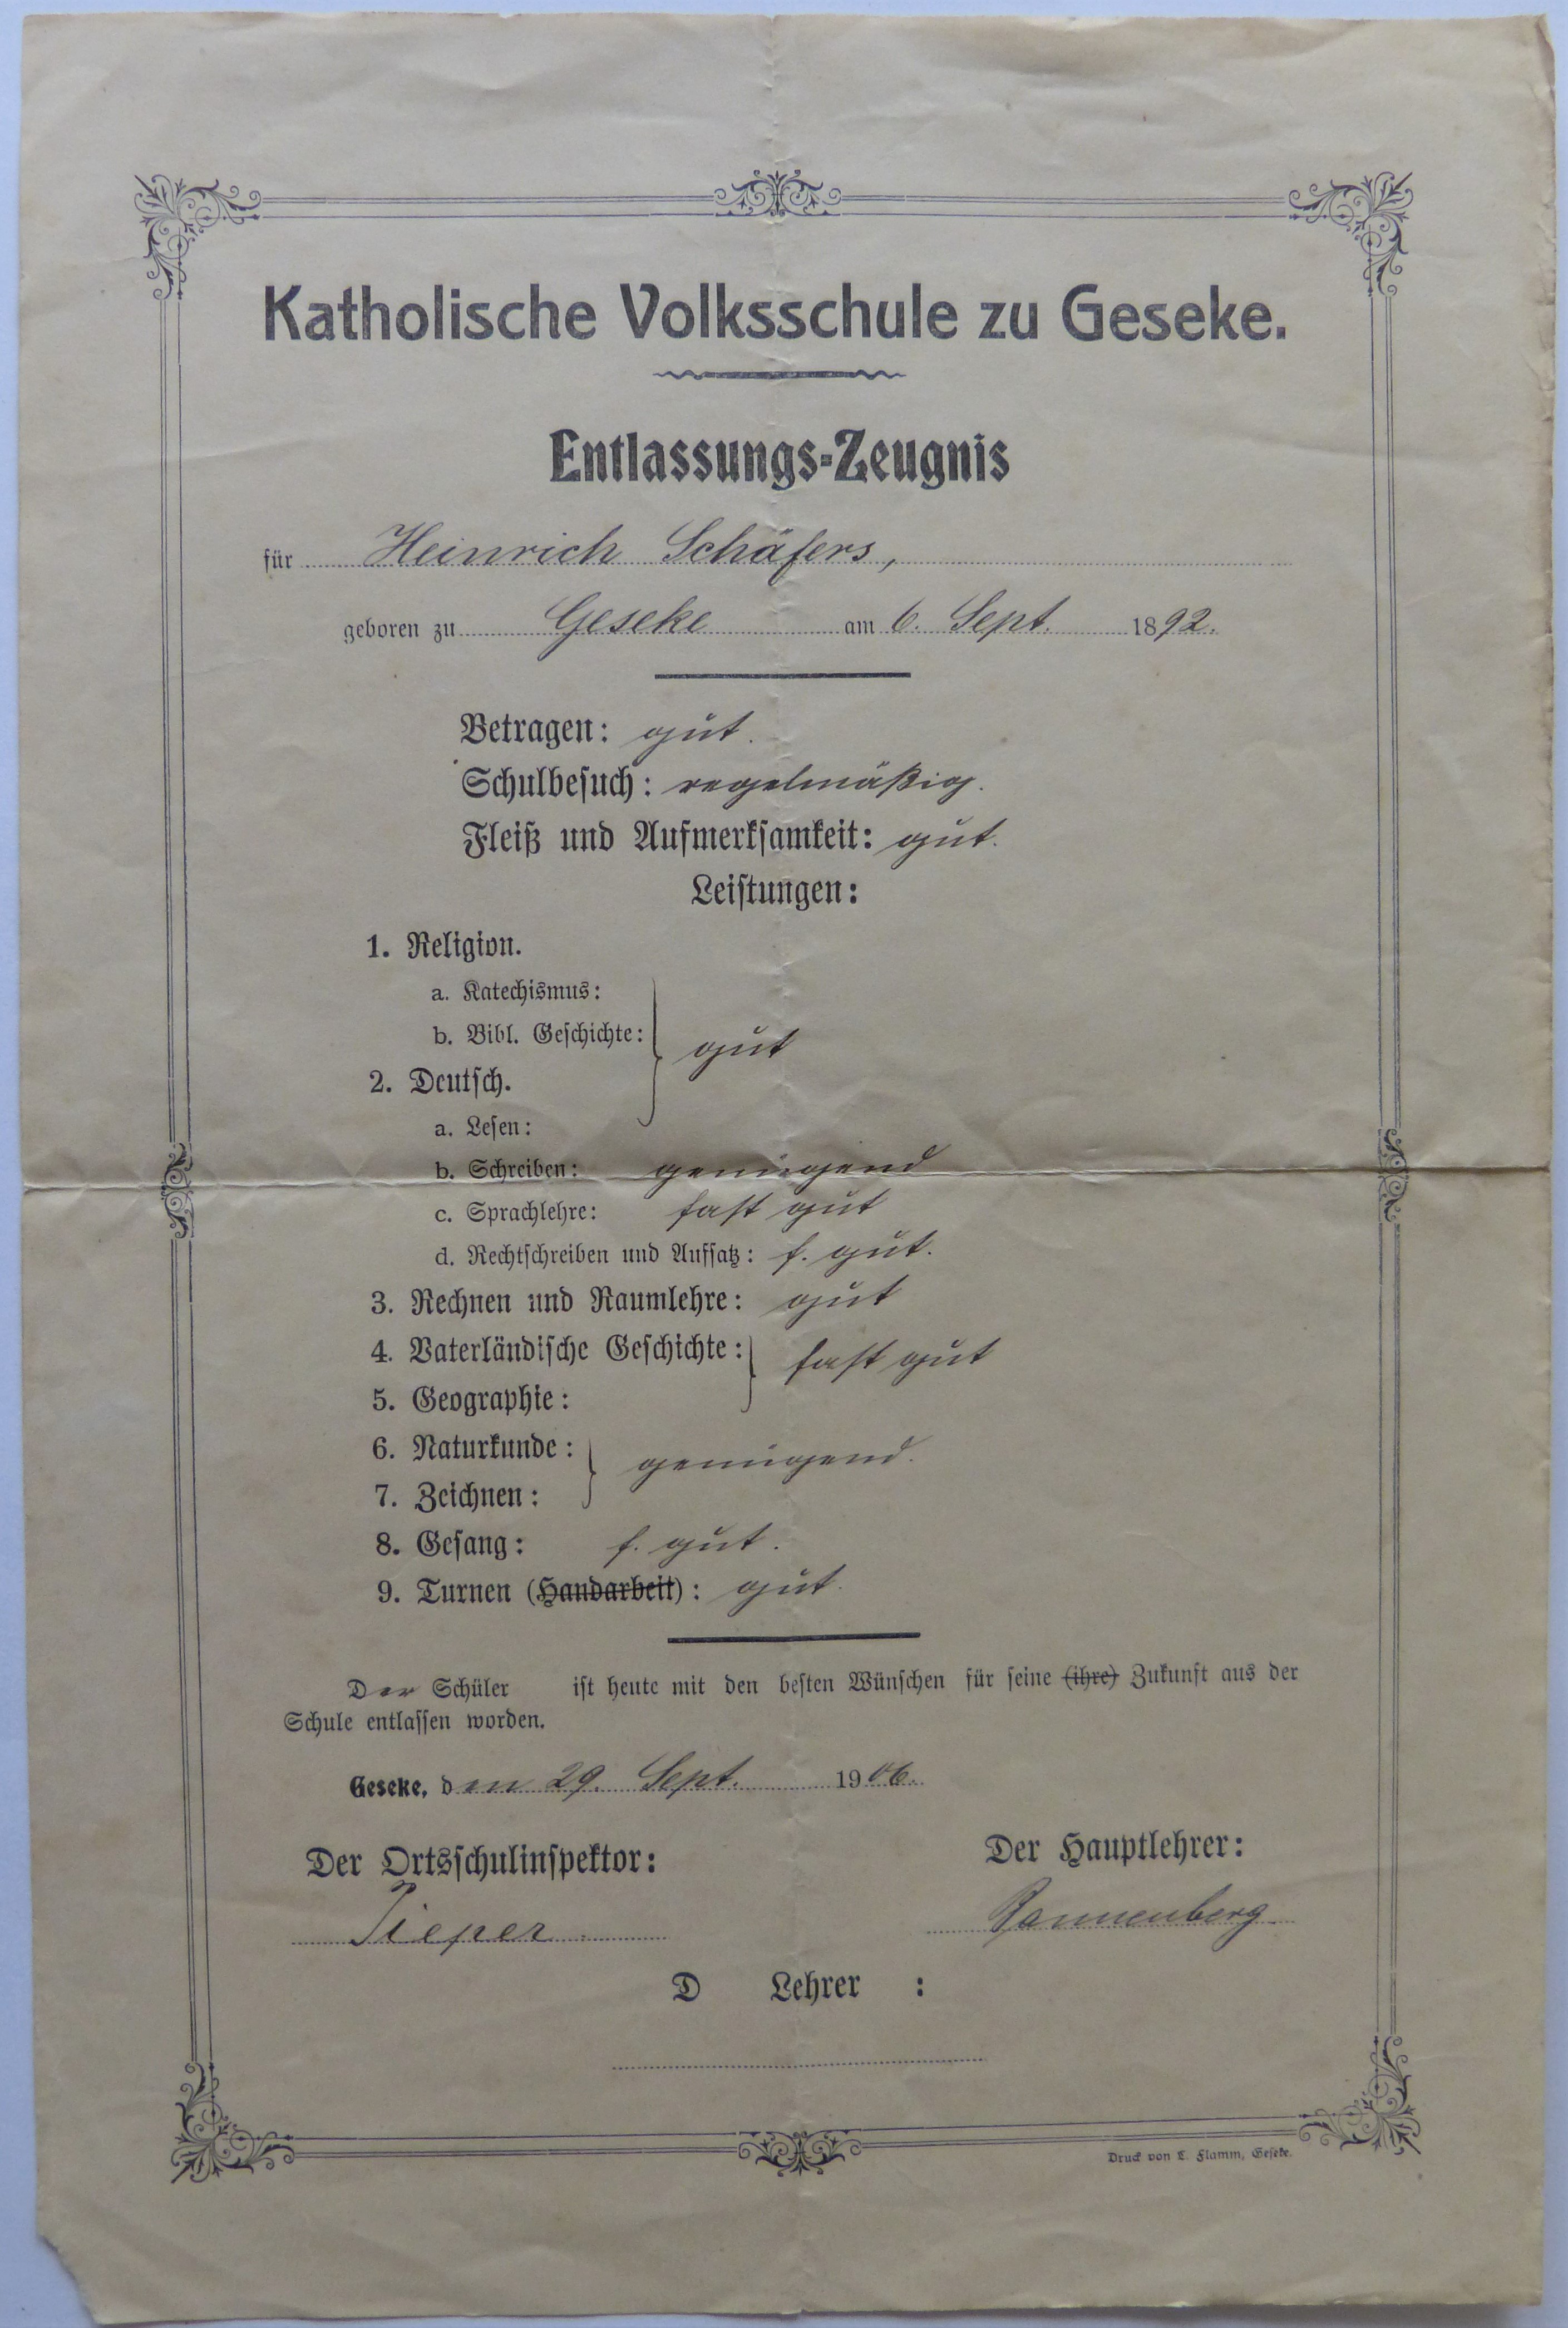 Entlassungszeugnis der Volksschule (Städt. Hellweg-Museum Geseke CC BY-NC-SA)